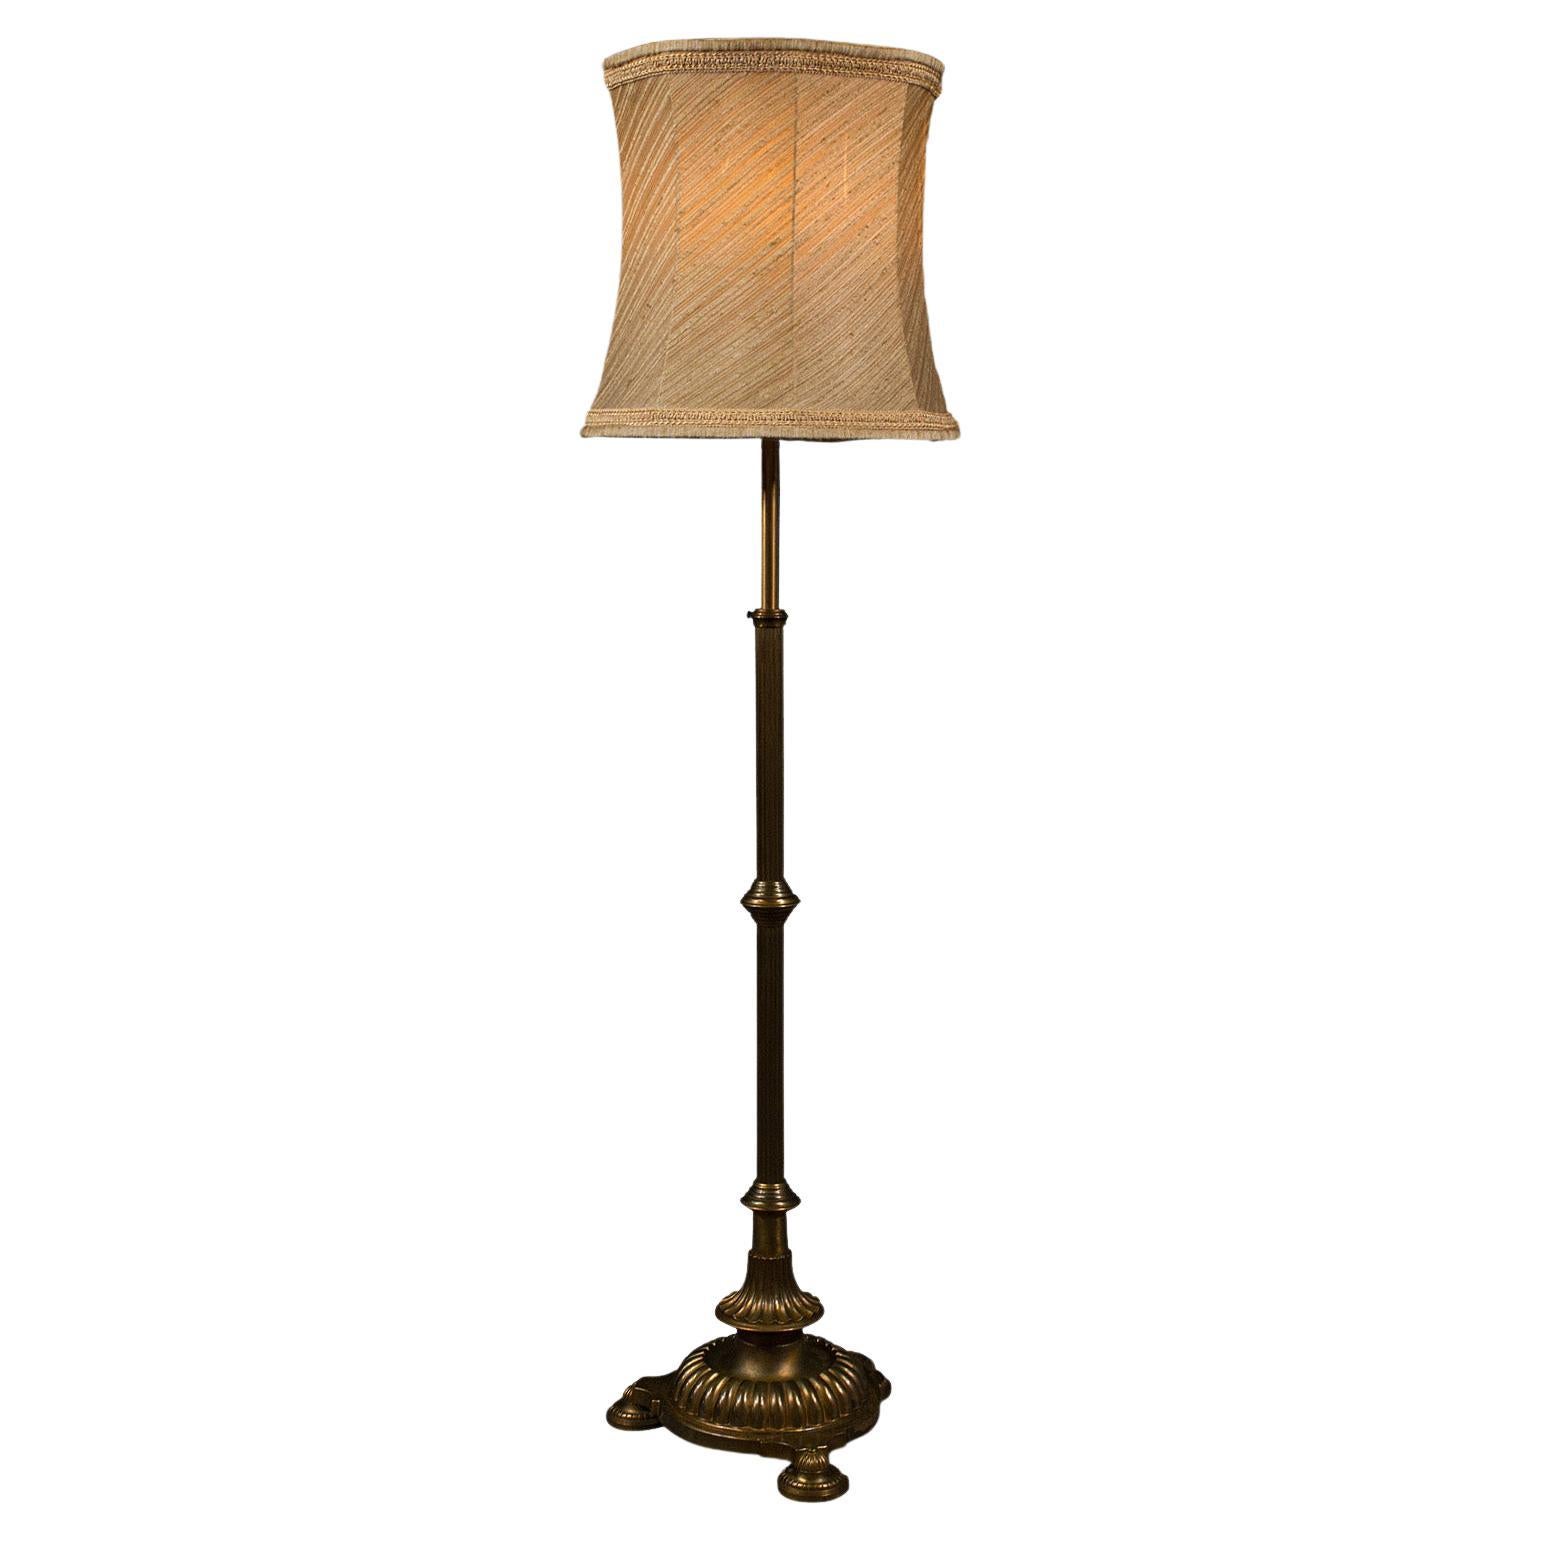 Vintage Standard Lamp, English, Brass, Adjustable Reading Light, 1940